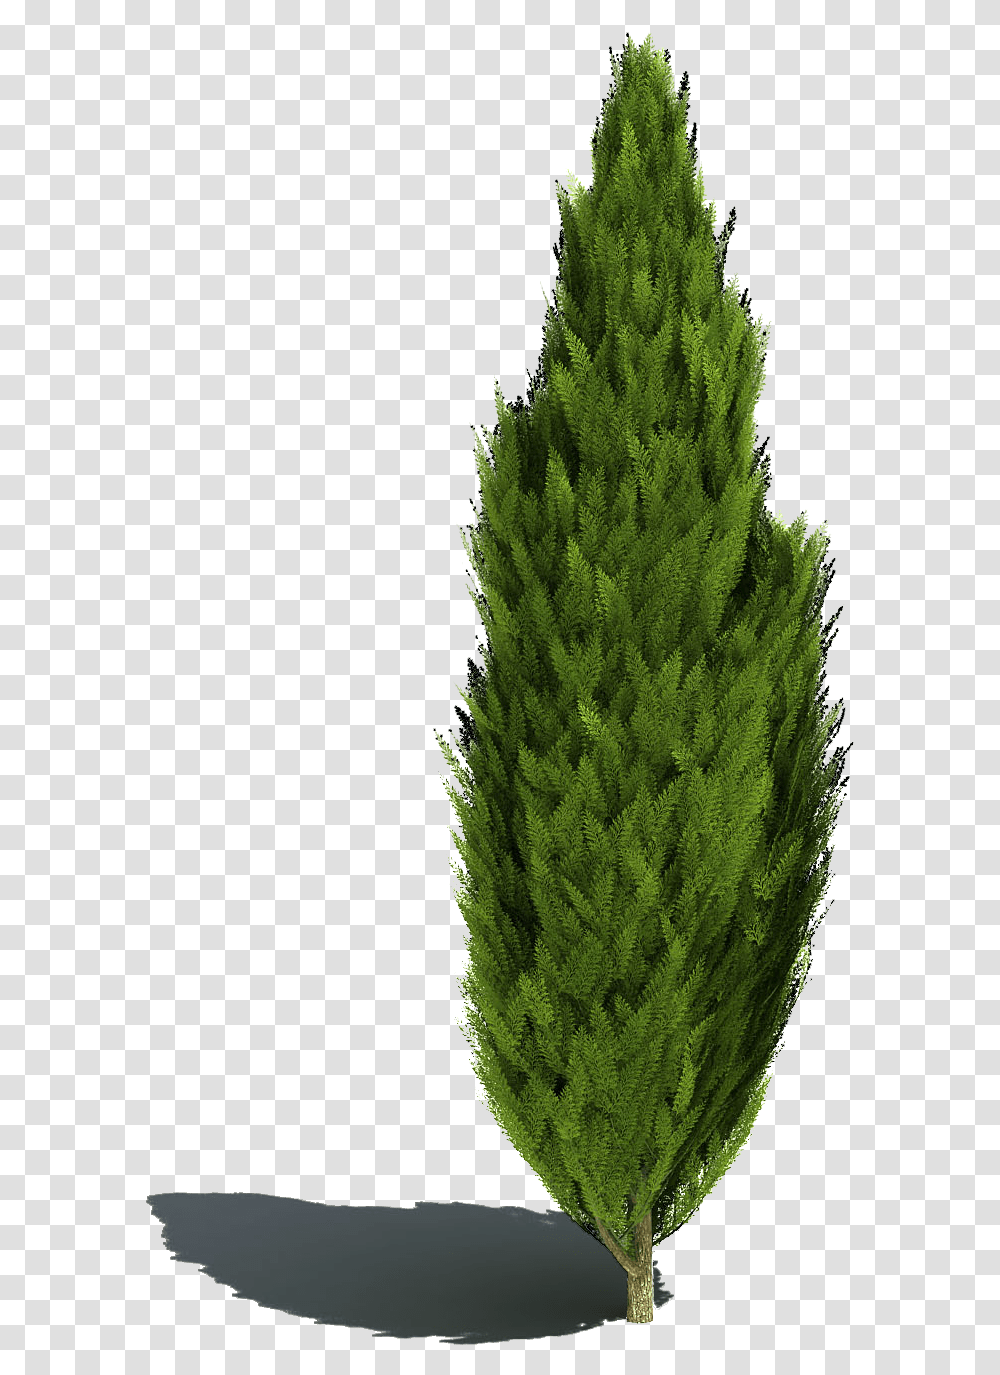 Plant Shrub Landscape Sketch Tree Bush Photoshop, Conifer, Fir, Spruce, Pine Transparent Png